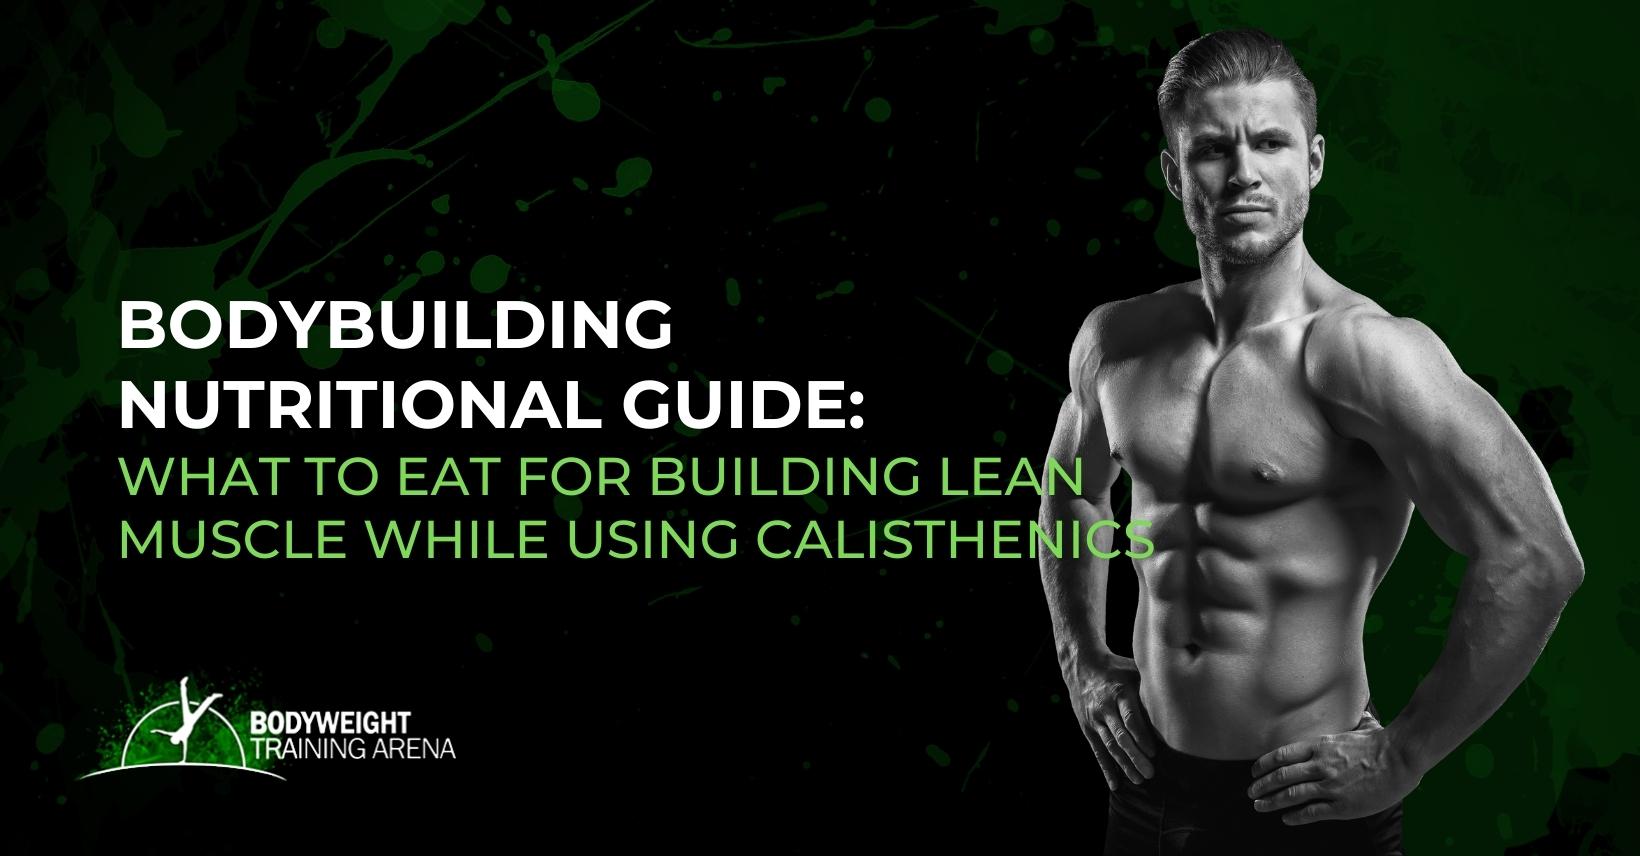 BWTA Bodybuilding Nutritional Guide